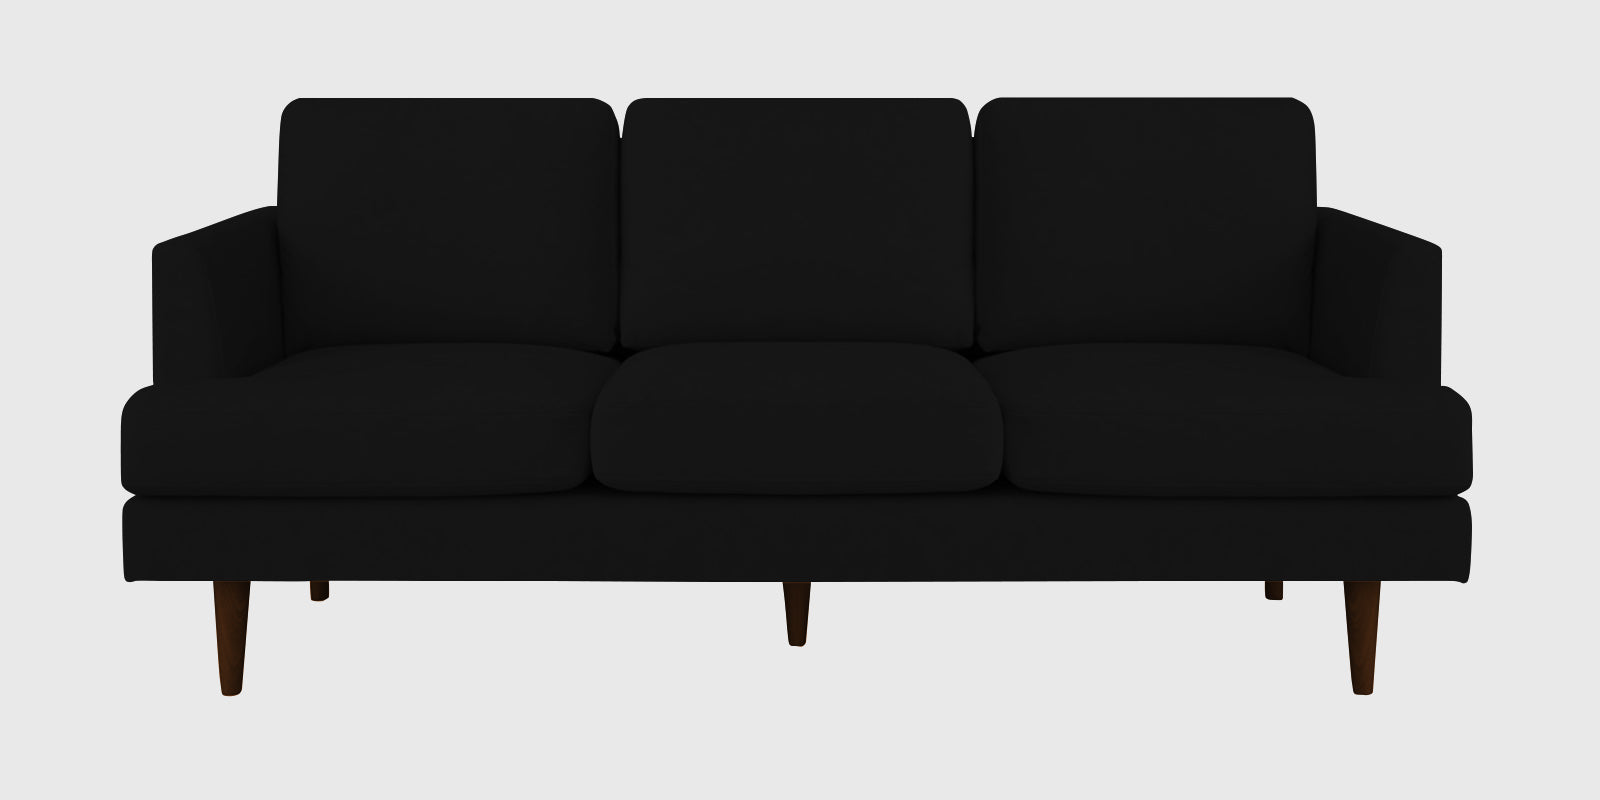 Motra Velvet 3 Seater Sofa in Adam Black Colour